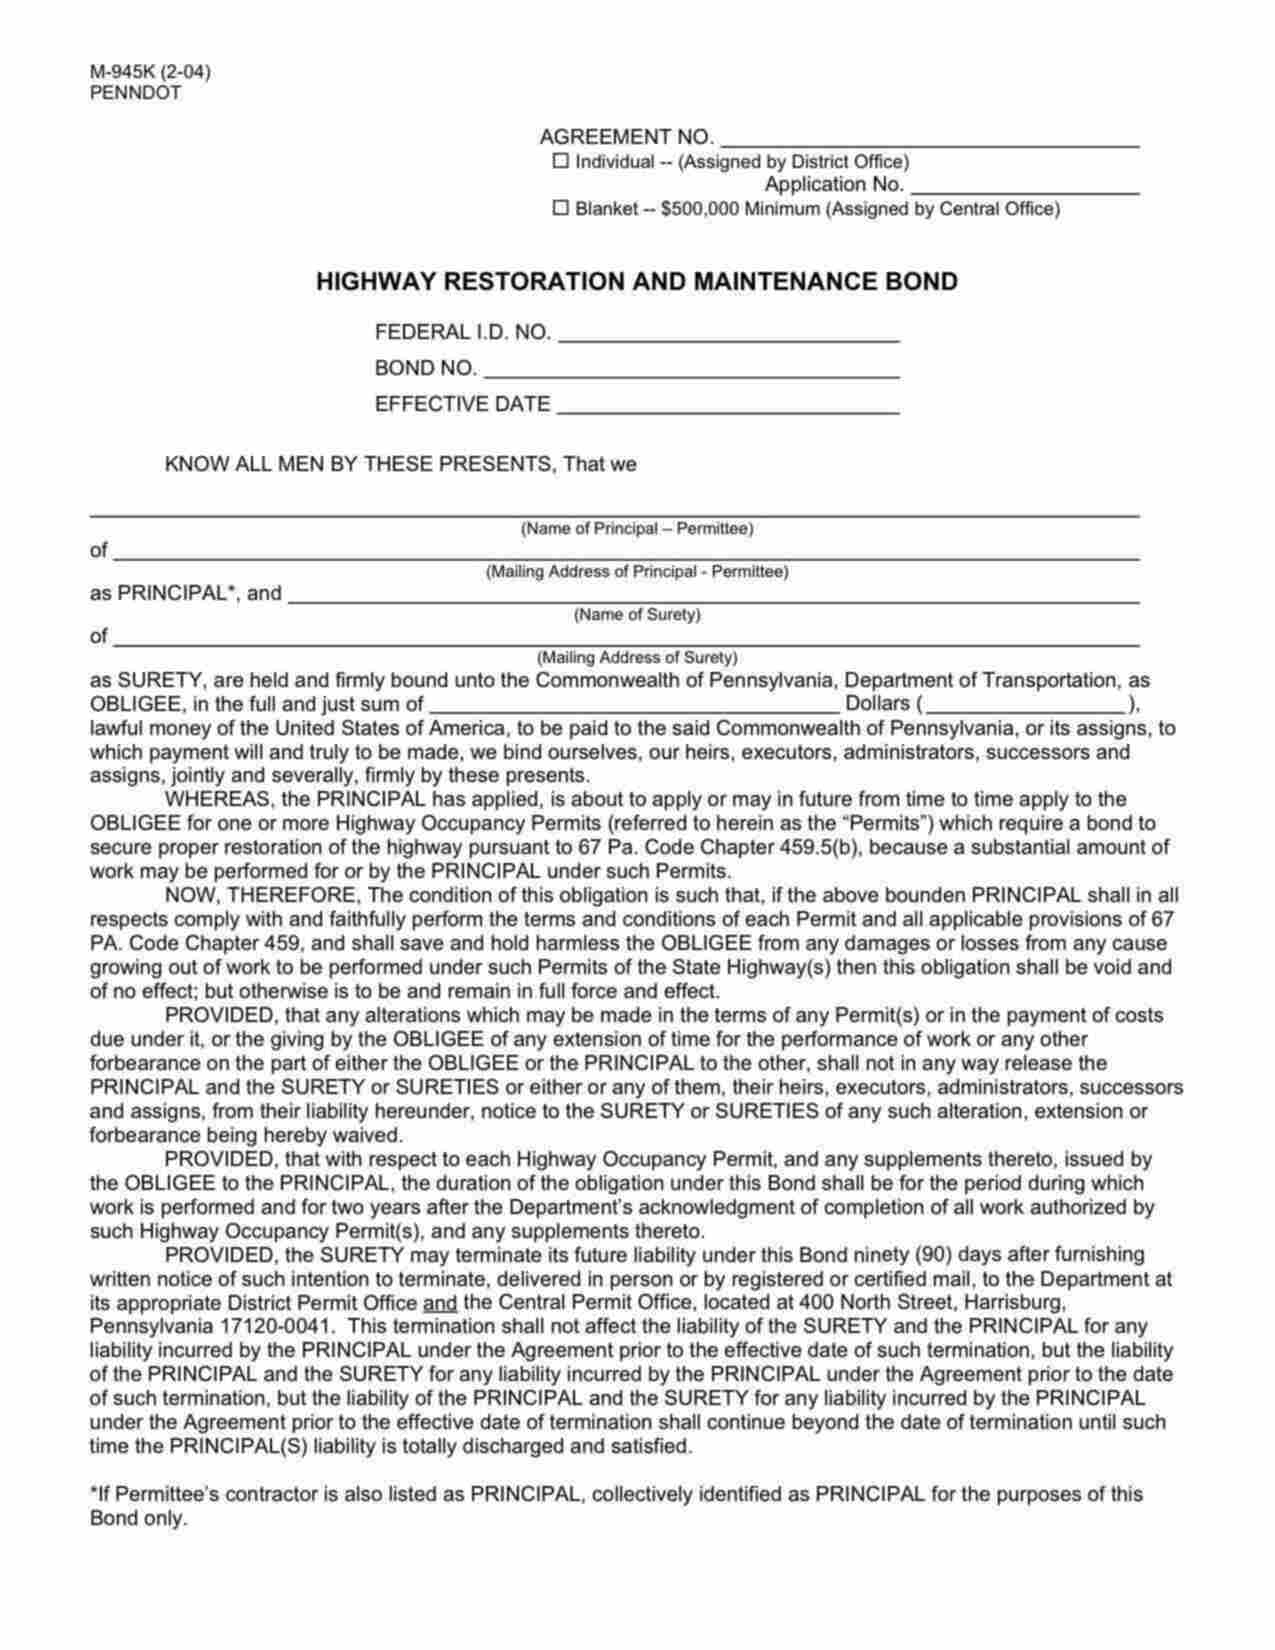 Pennsylvania Highway Restoration and Maintenance - Individual (M-945K) Bond Form